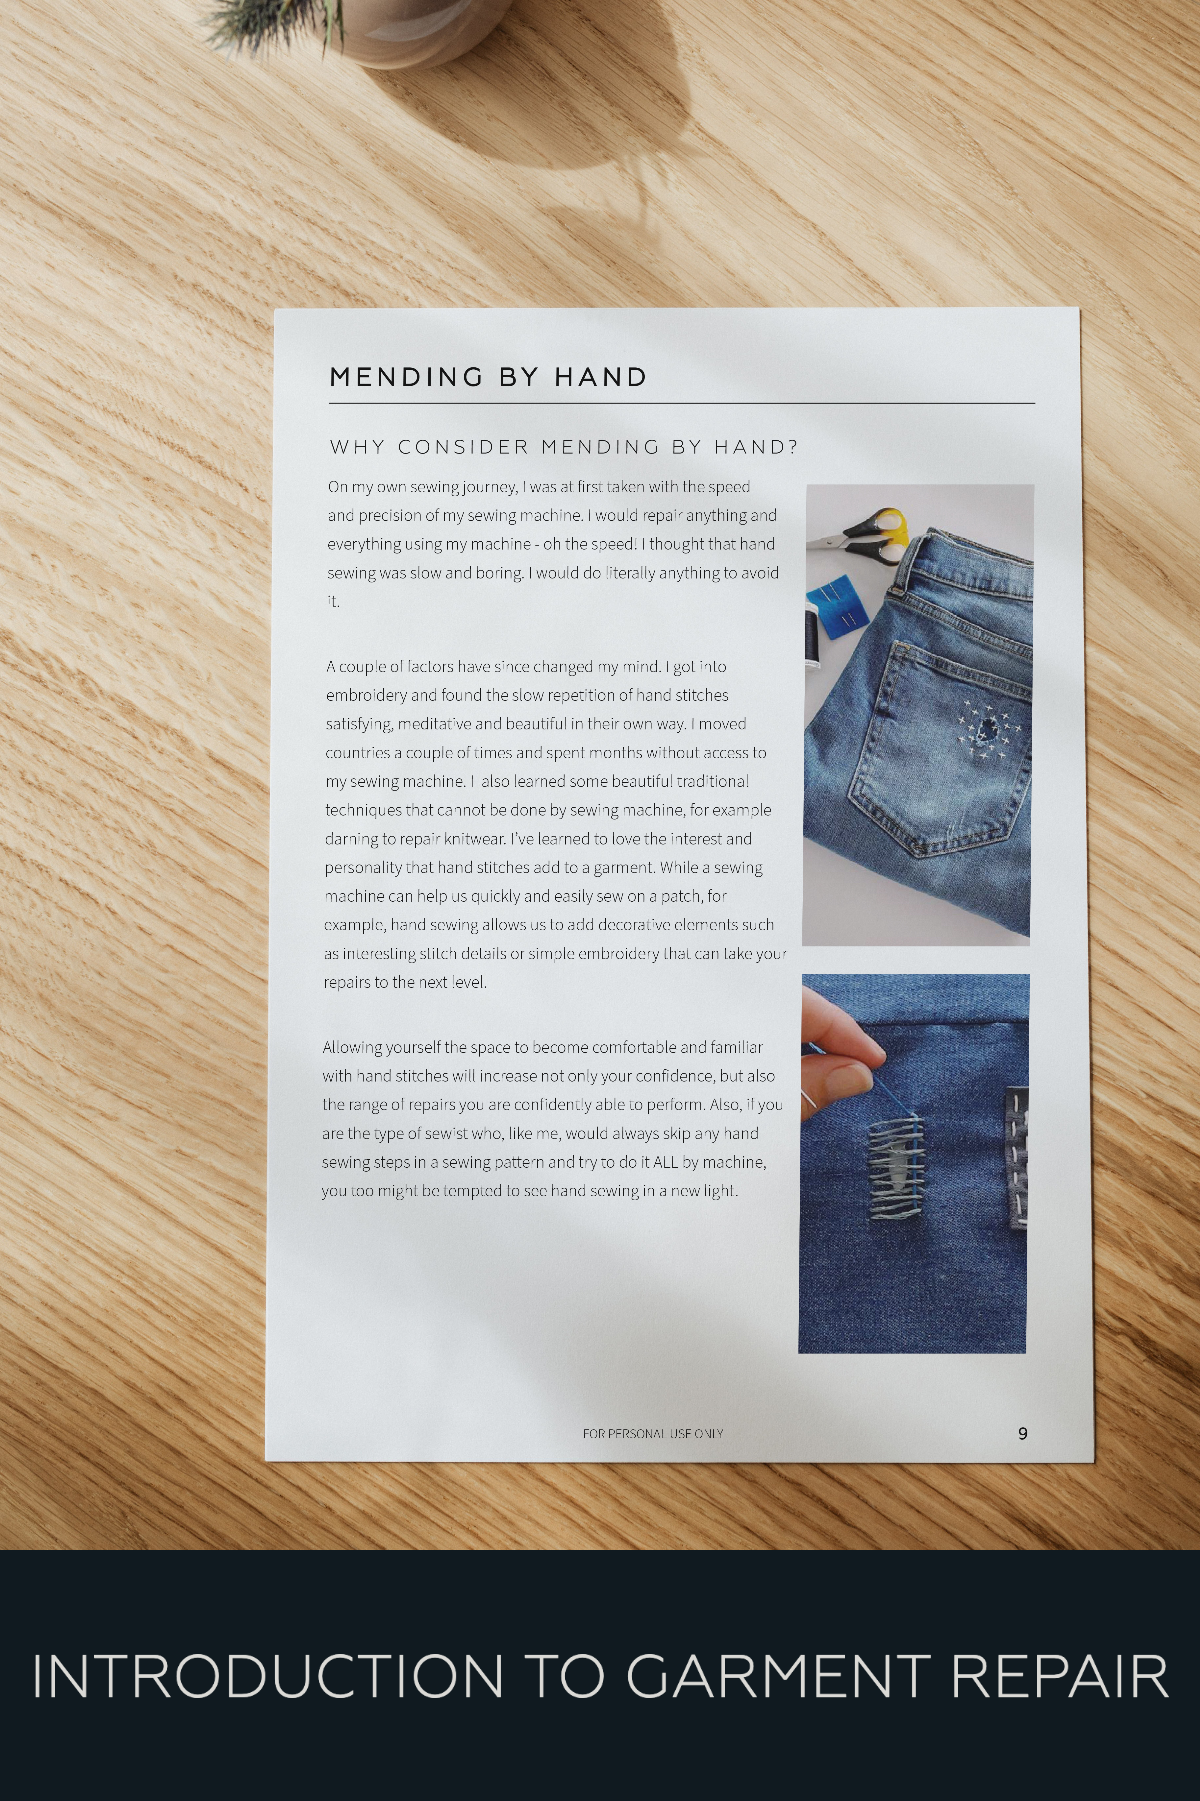 Introduction to Garment Repair (Copy)